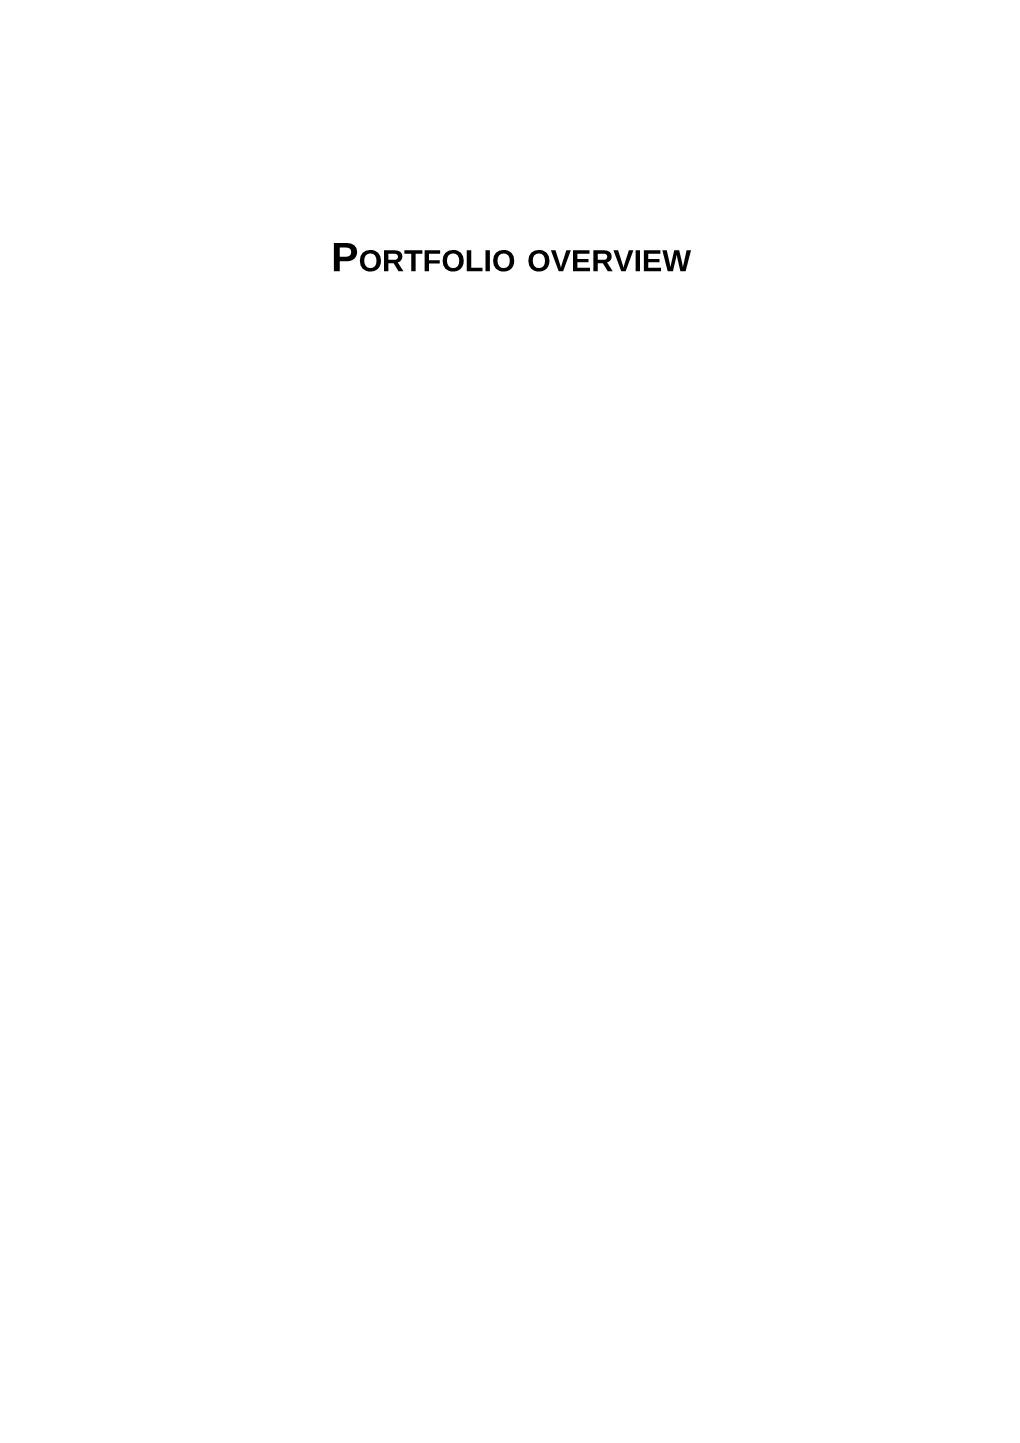 PORTFOLIO ADDITIONAL ESTIMATES STATEMENTS 2012 13 - Portfolio Overview